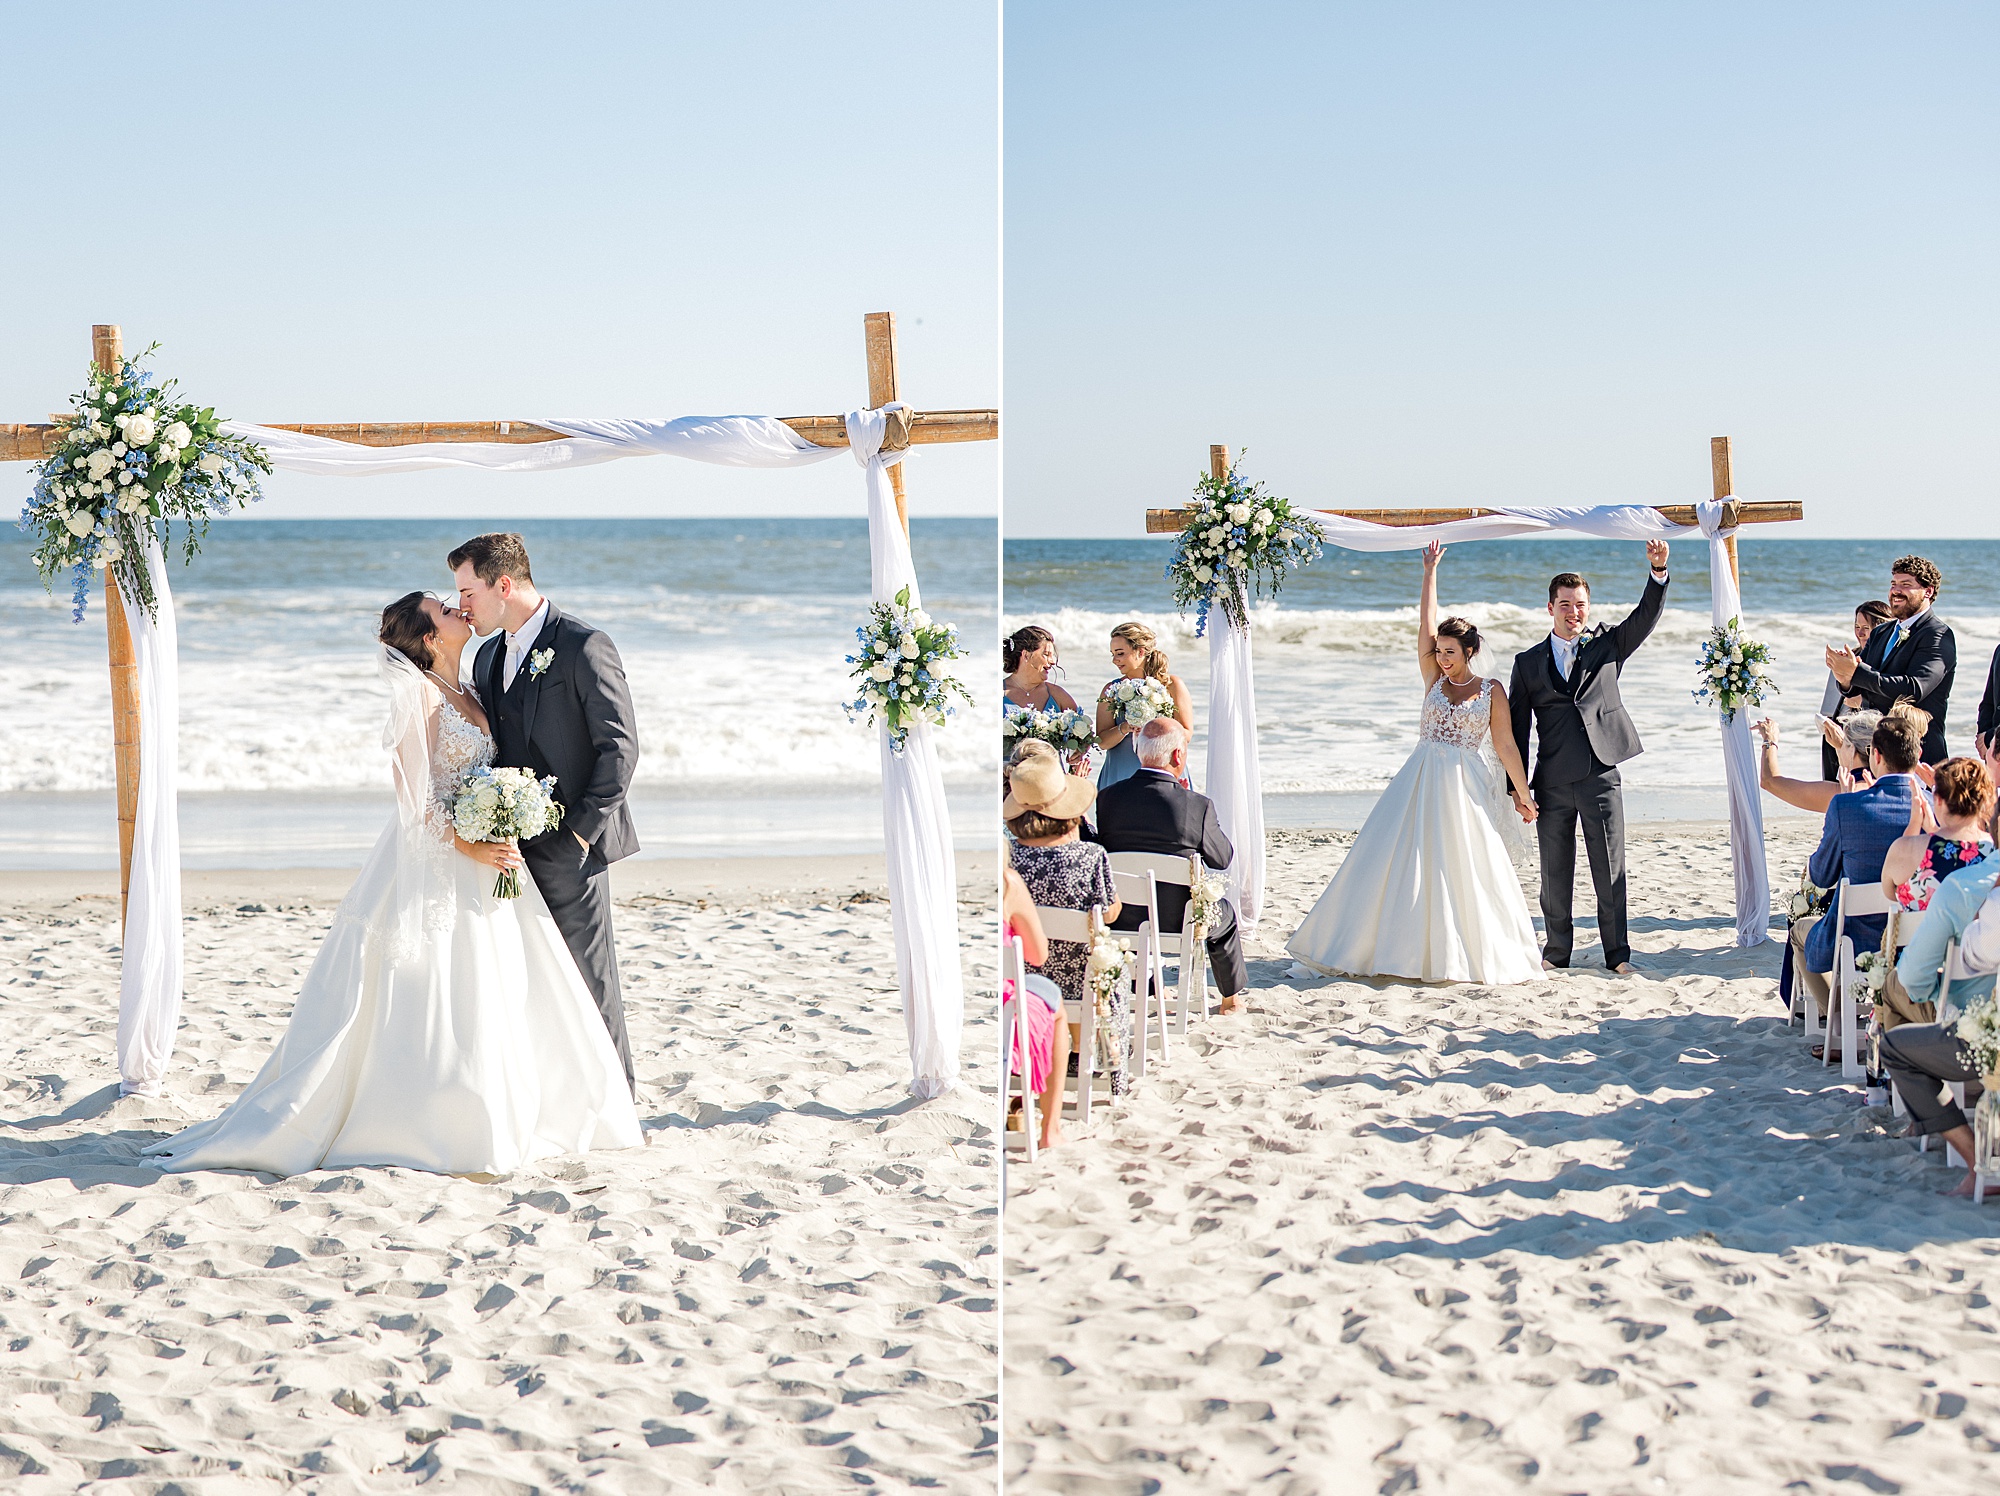 Ocean Isle Beach Wedding in NC at Carolina Memories Beach house